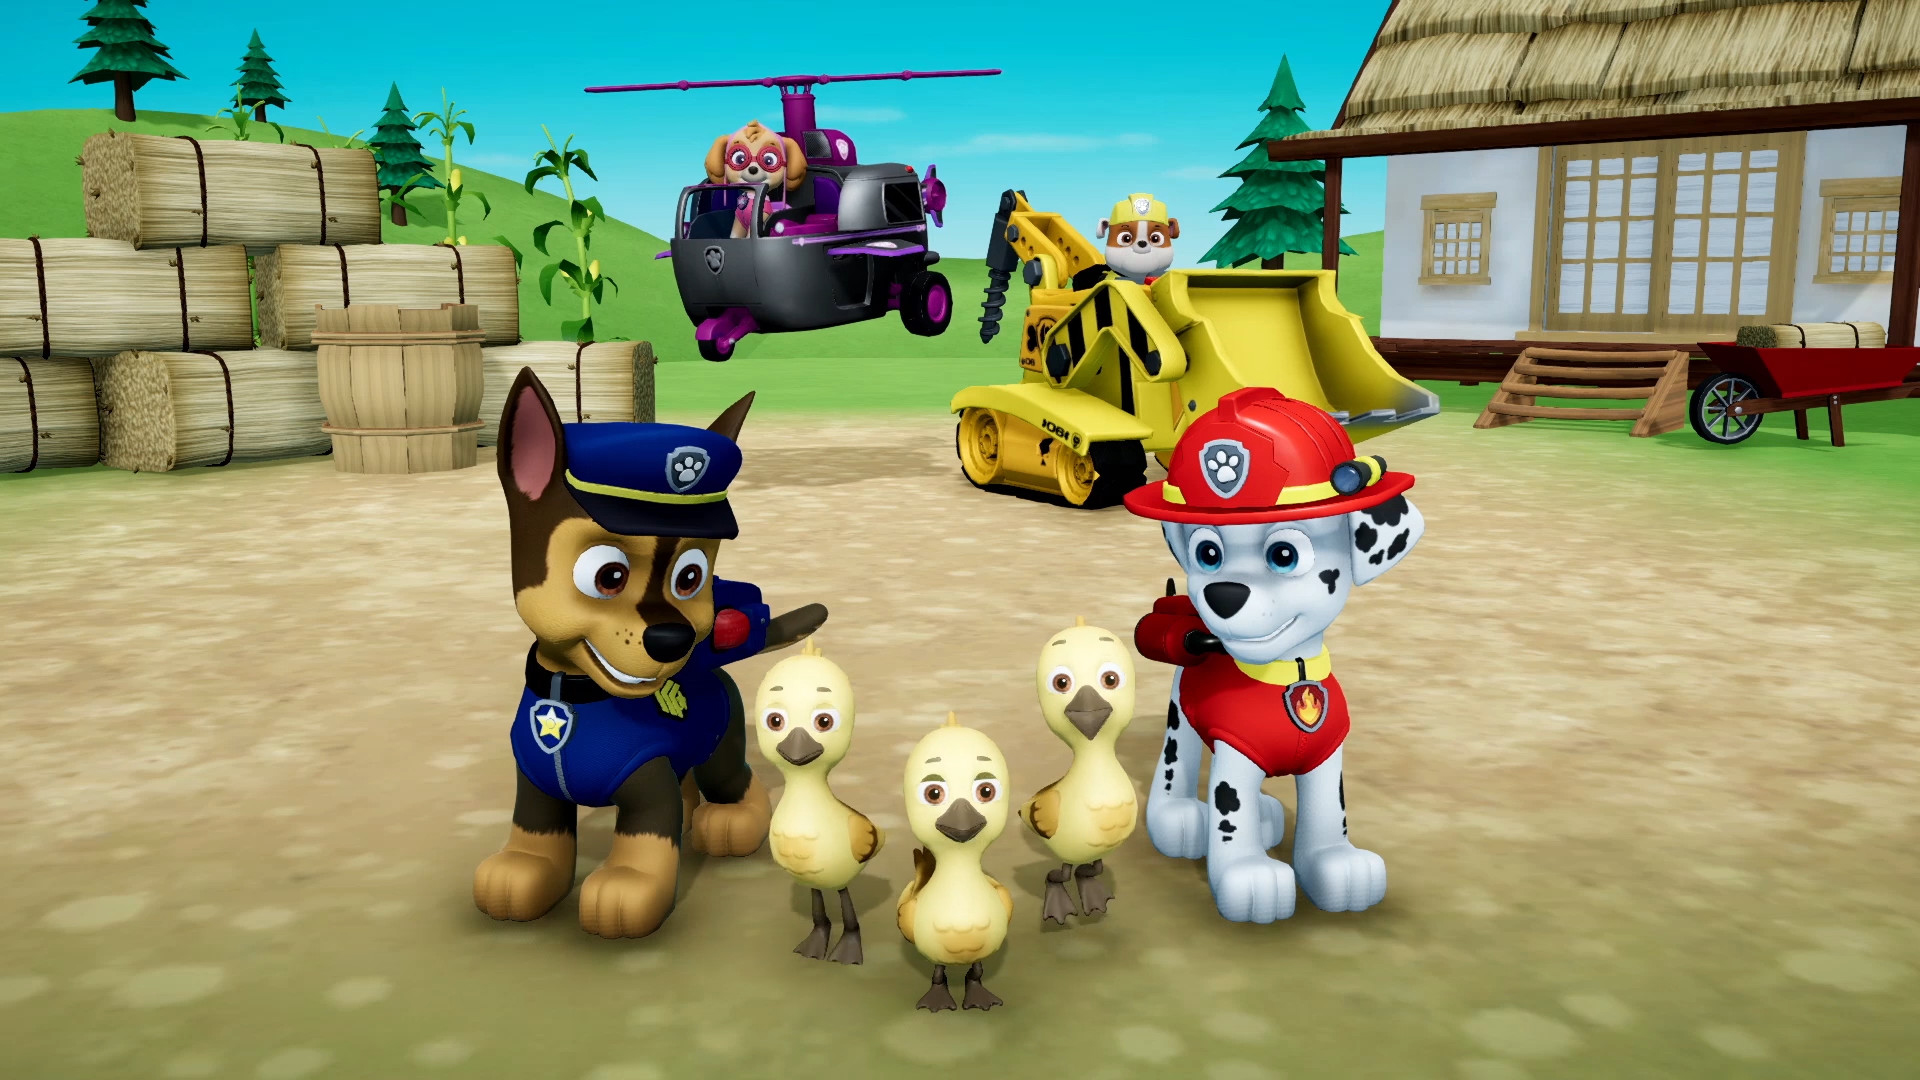 Nickelodeon lança jogo da Patrulha Canina para PS4 e XBOX One